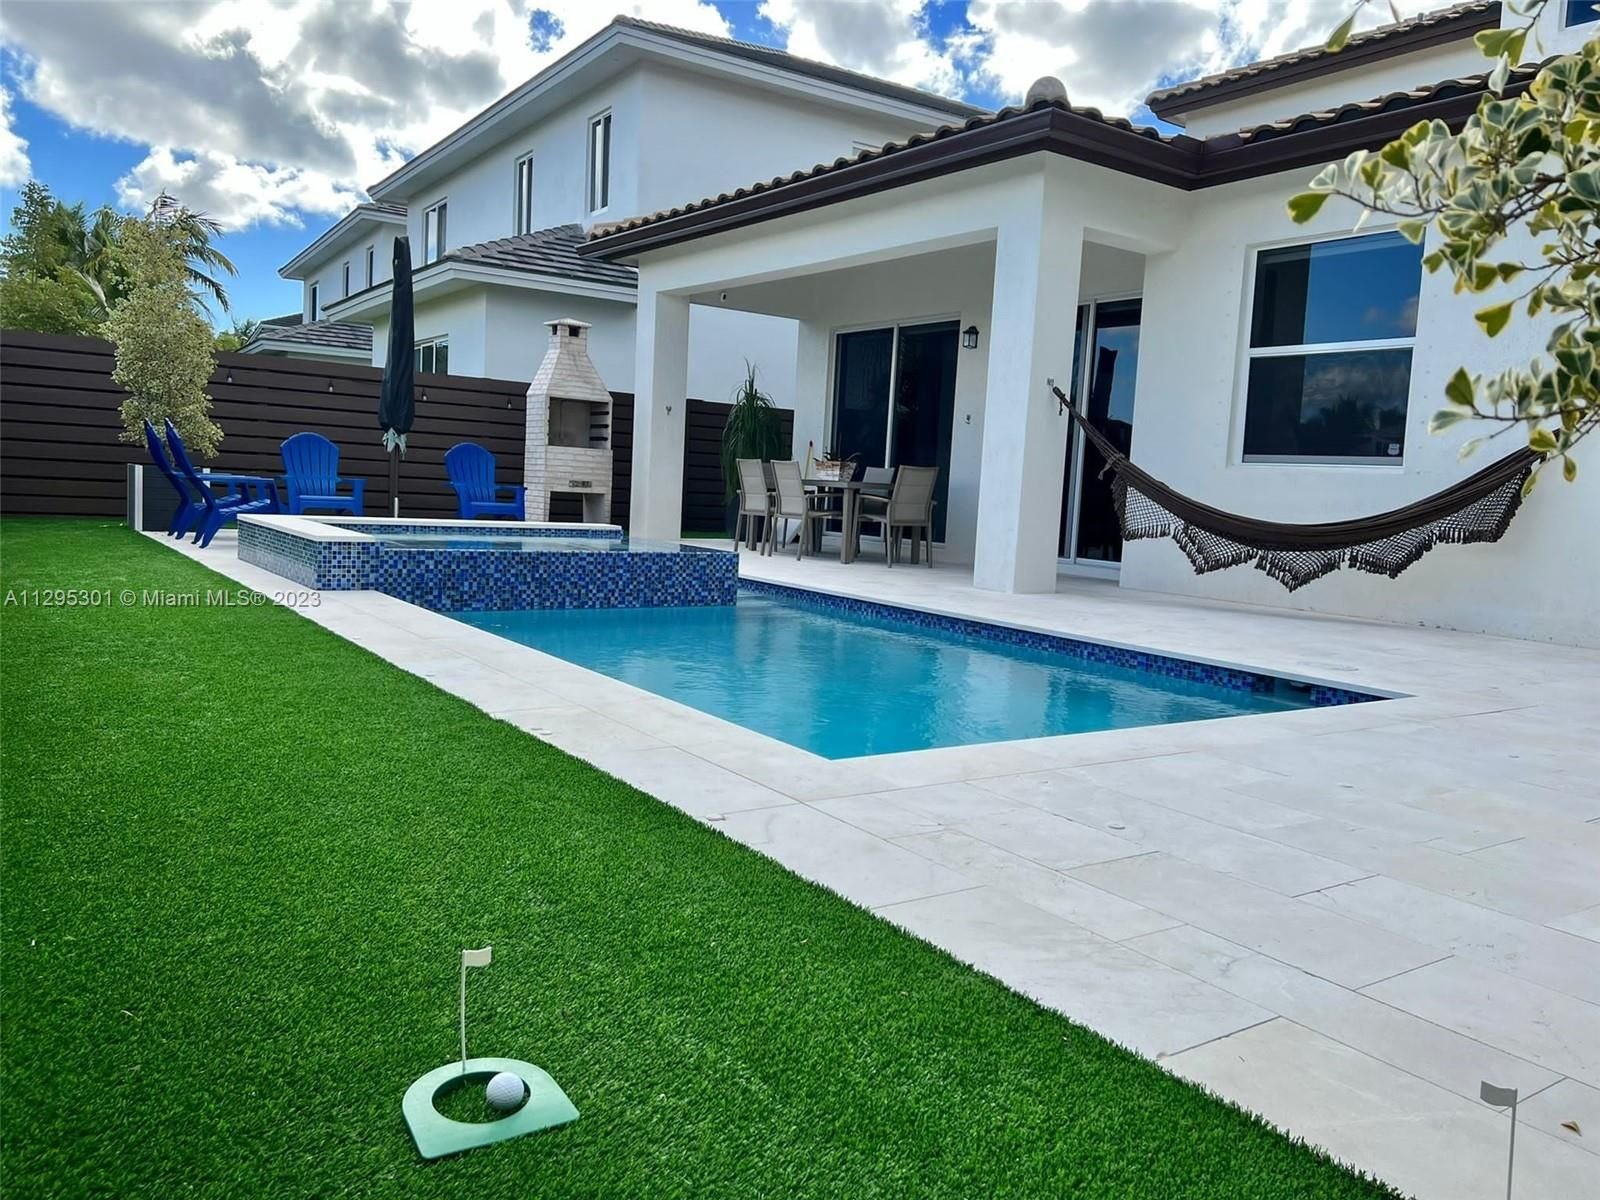 Real estate property located at 15139 176th St, Miami-Dade County, Miami, FL